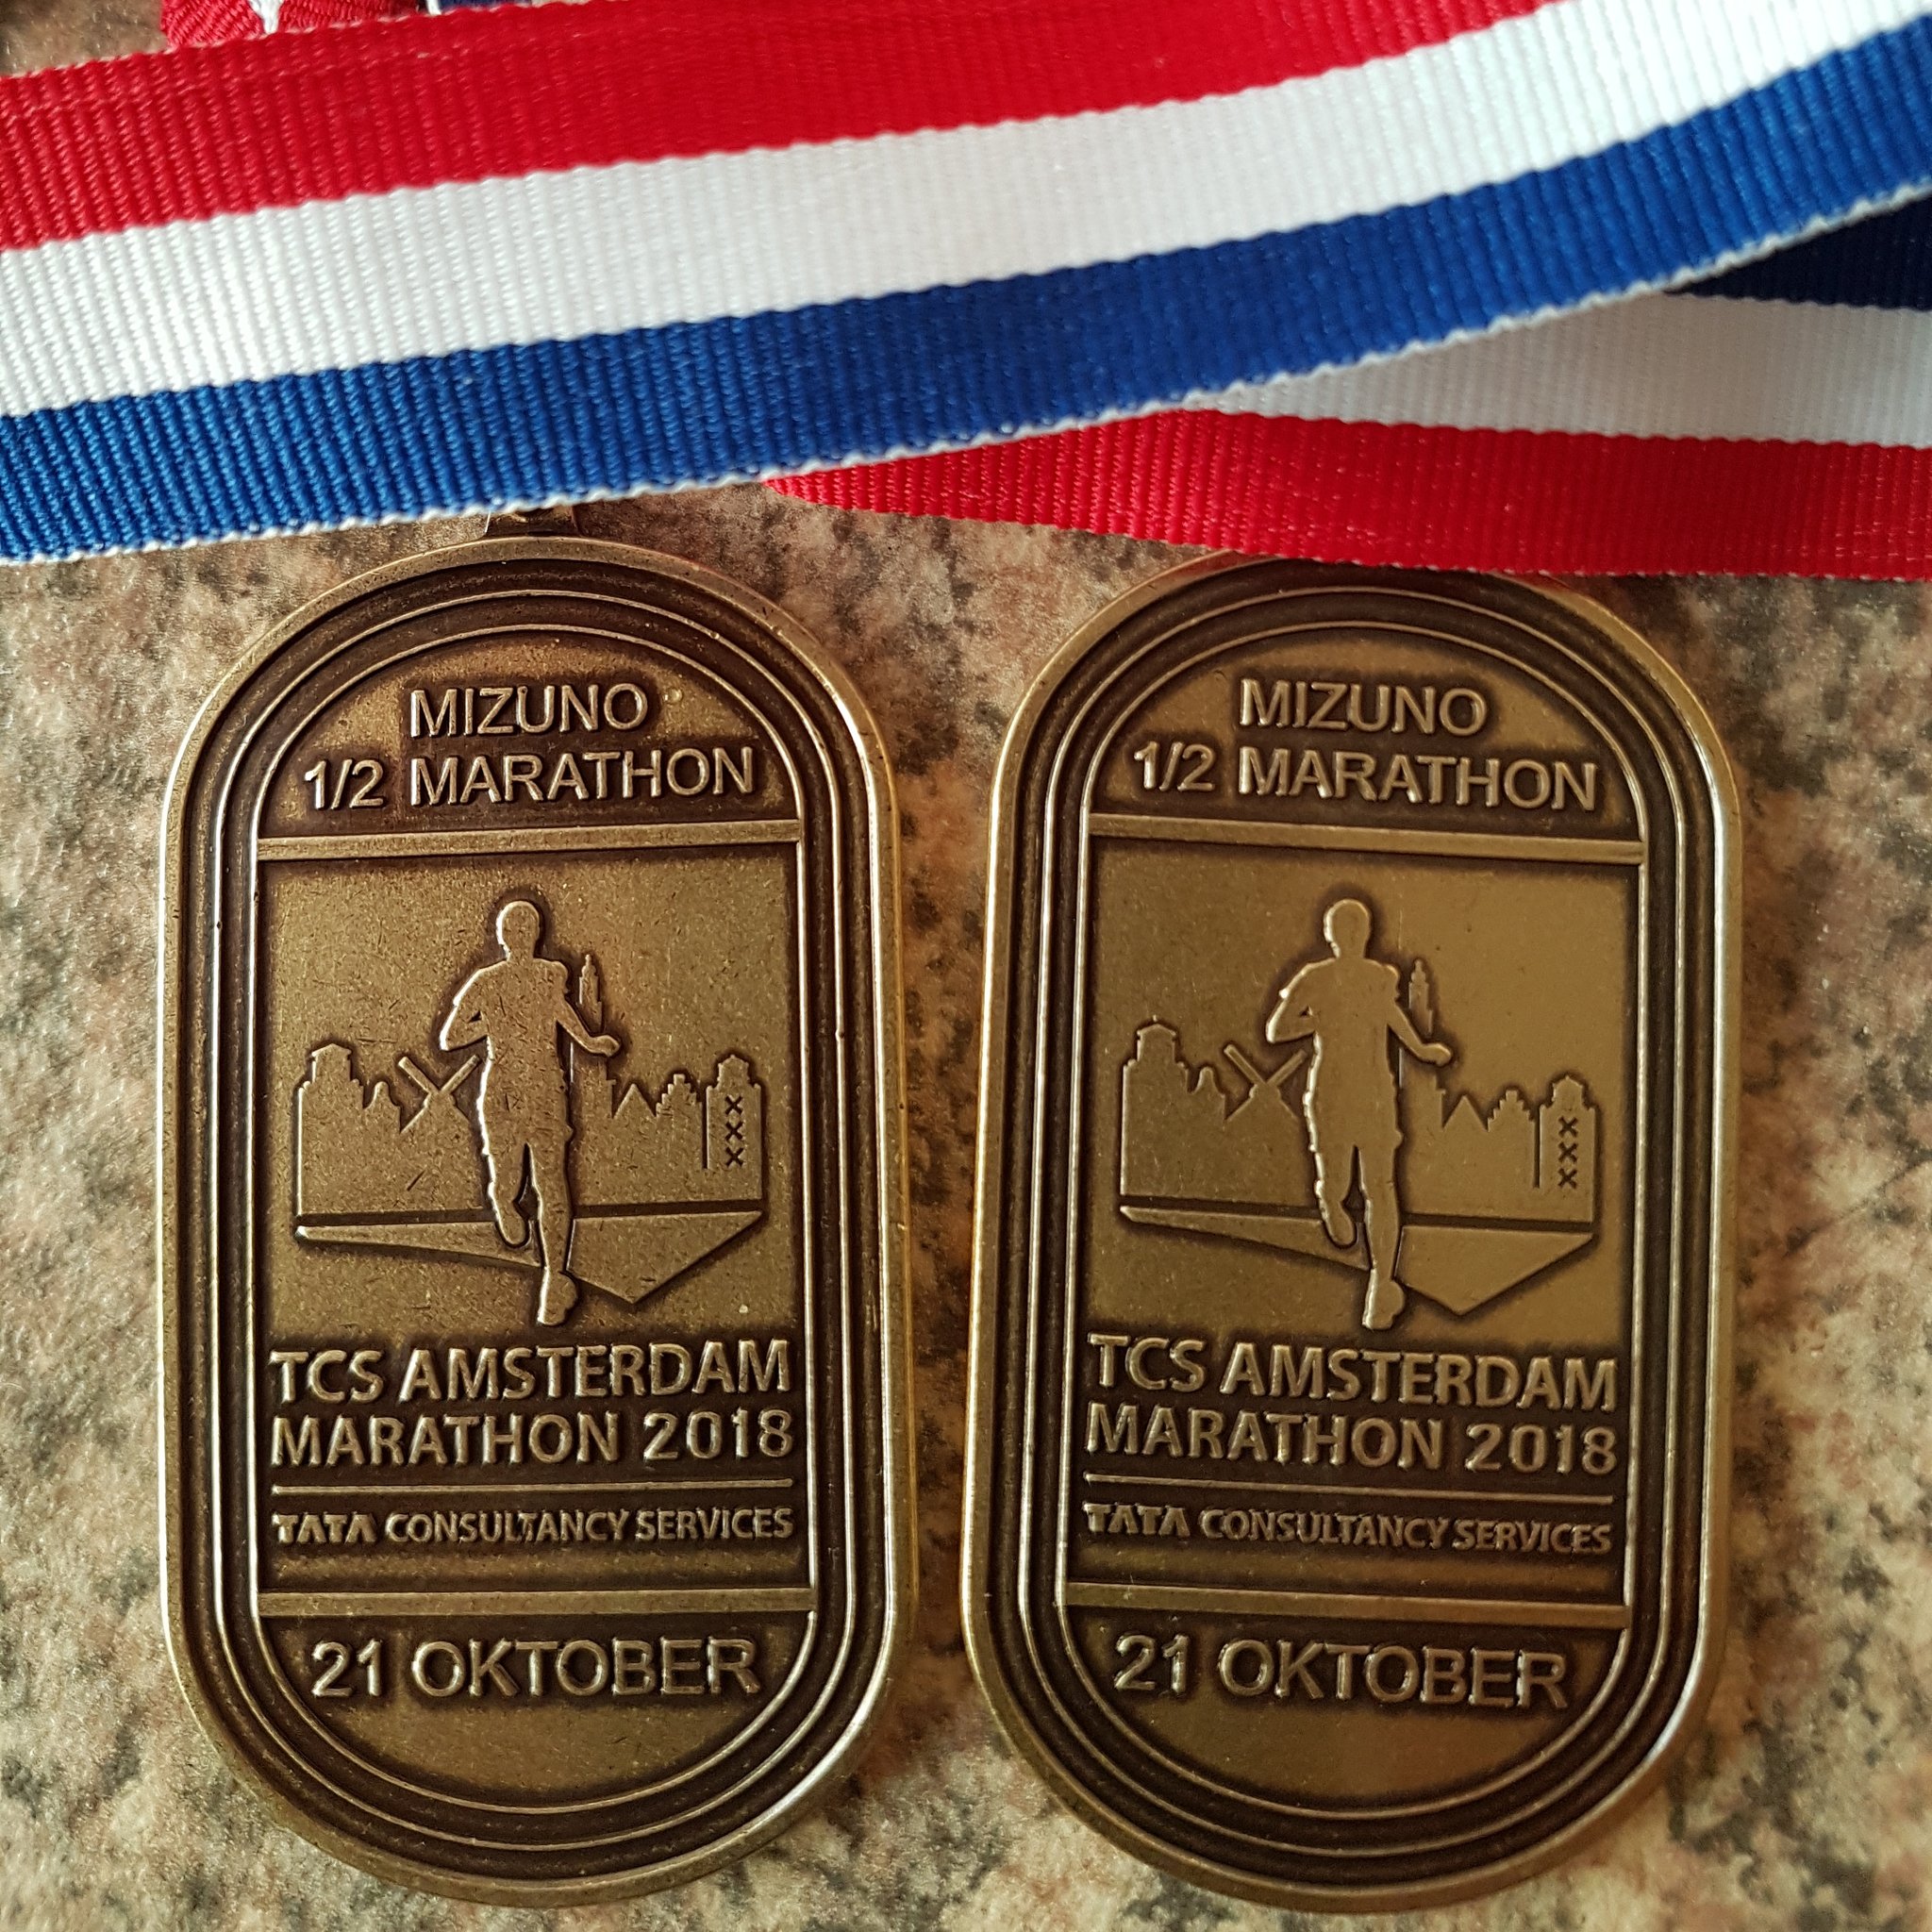 Sergio Felter on Twitter: "Half marathon Amsterdam medals. Thanks @Win4Youth invitation https://t.co/ea1gIYFLes" /